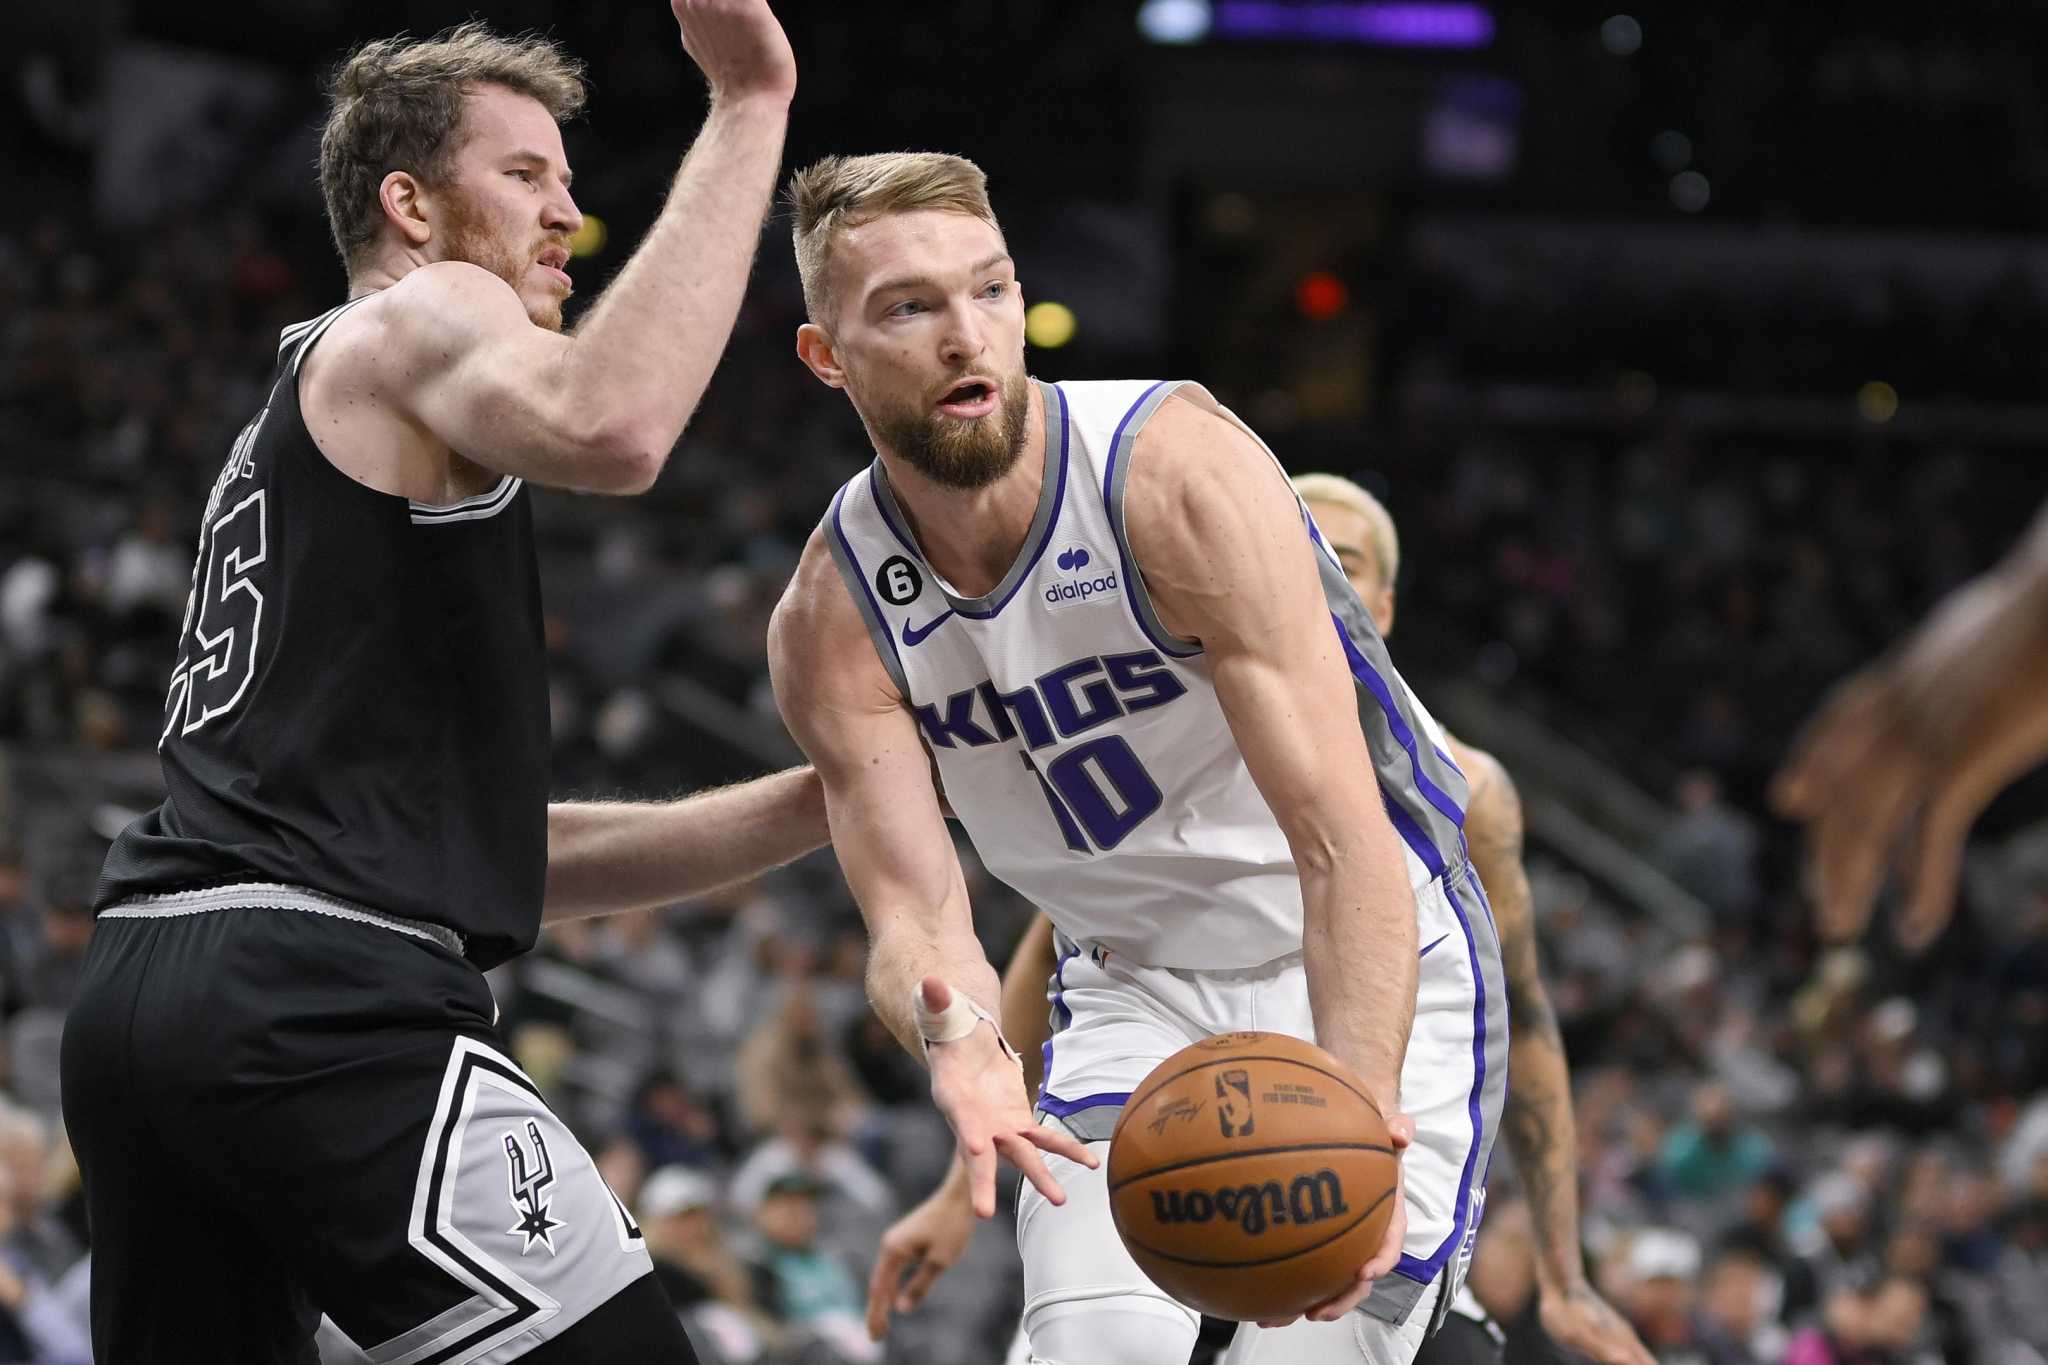 Kings roll past Spurs, extend winning streak to 4 games